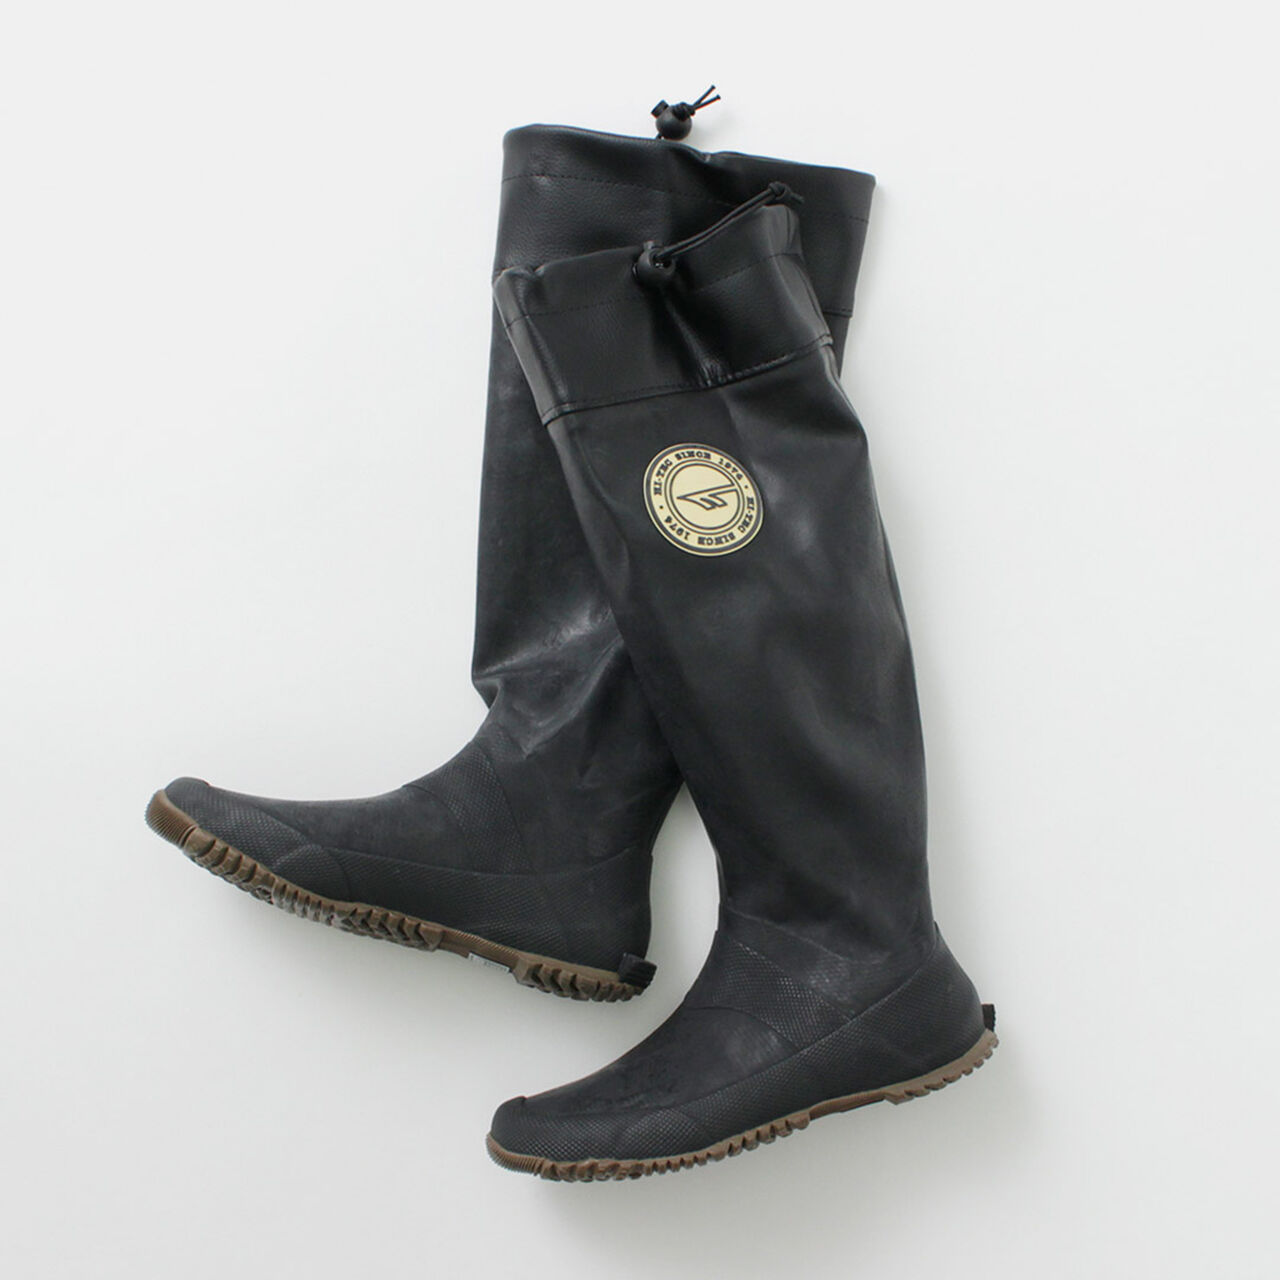 Kagerou Rain boots,Black, large image number 0